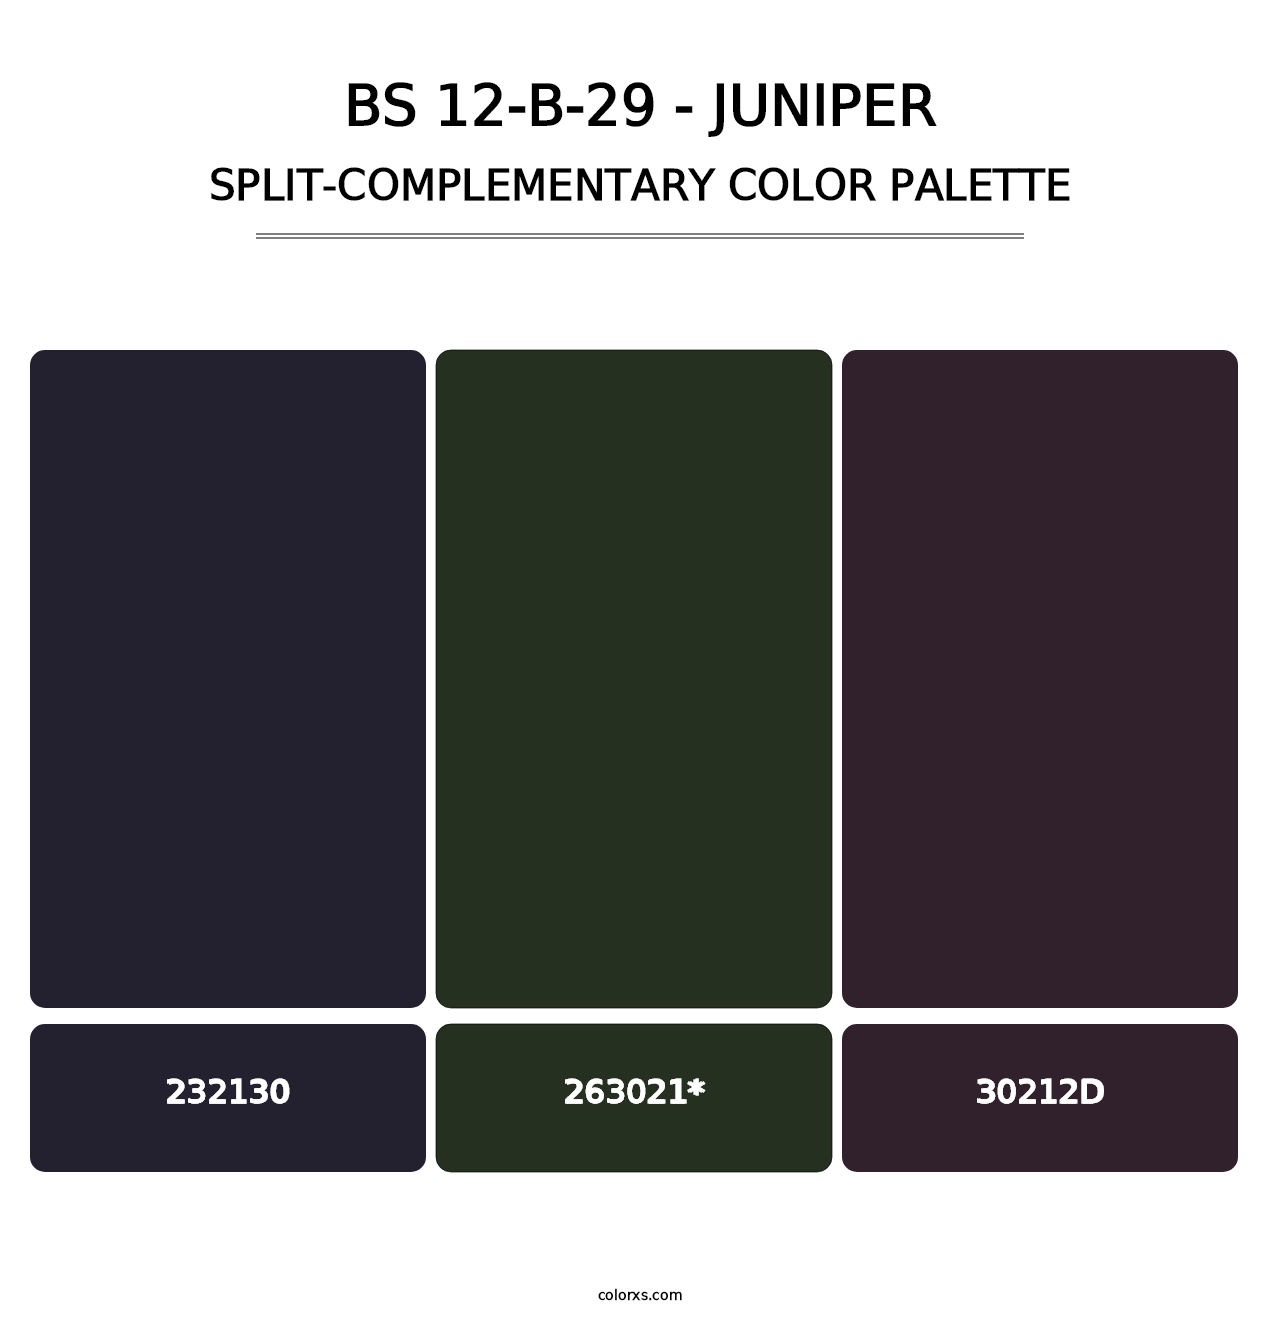 BS 12-B-29 - Juniper - Split-Complementary Color Palette